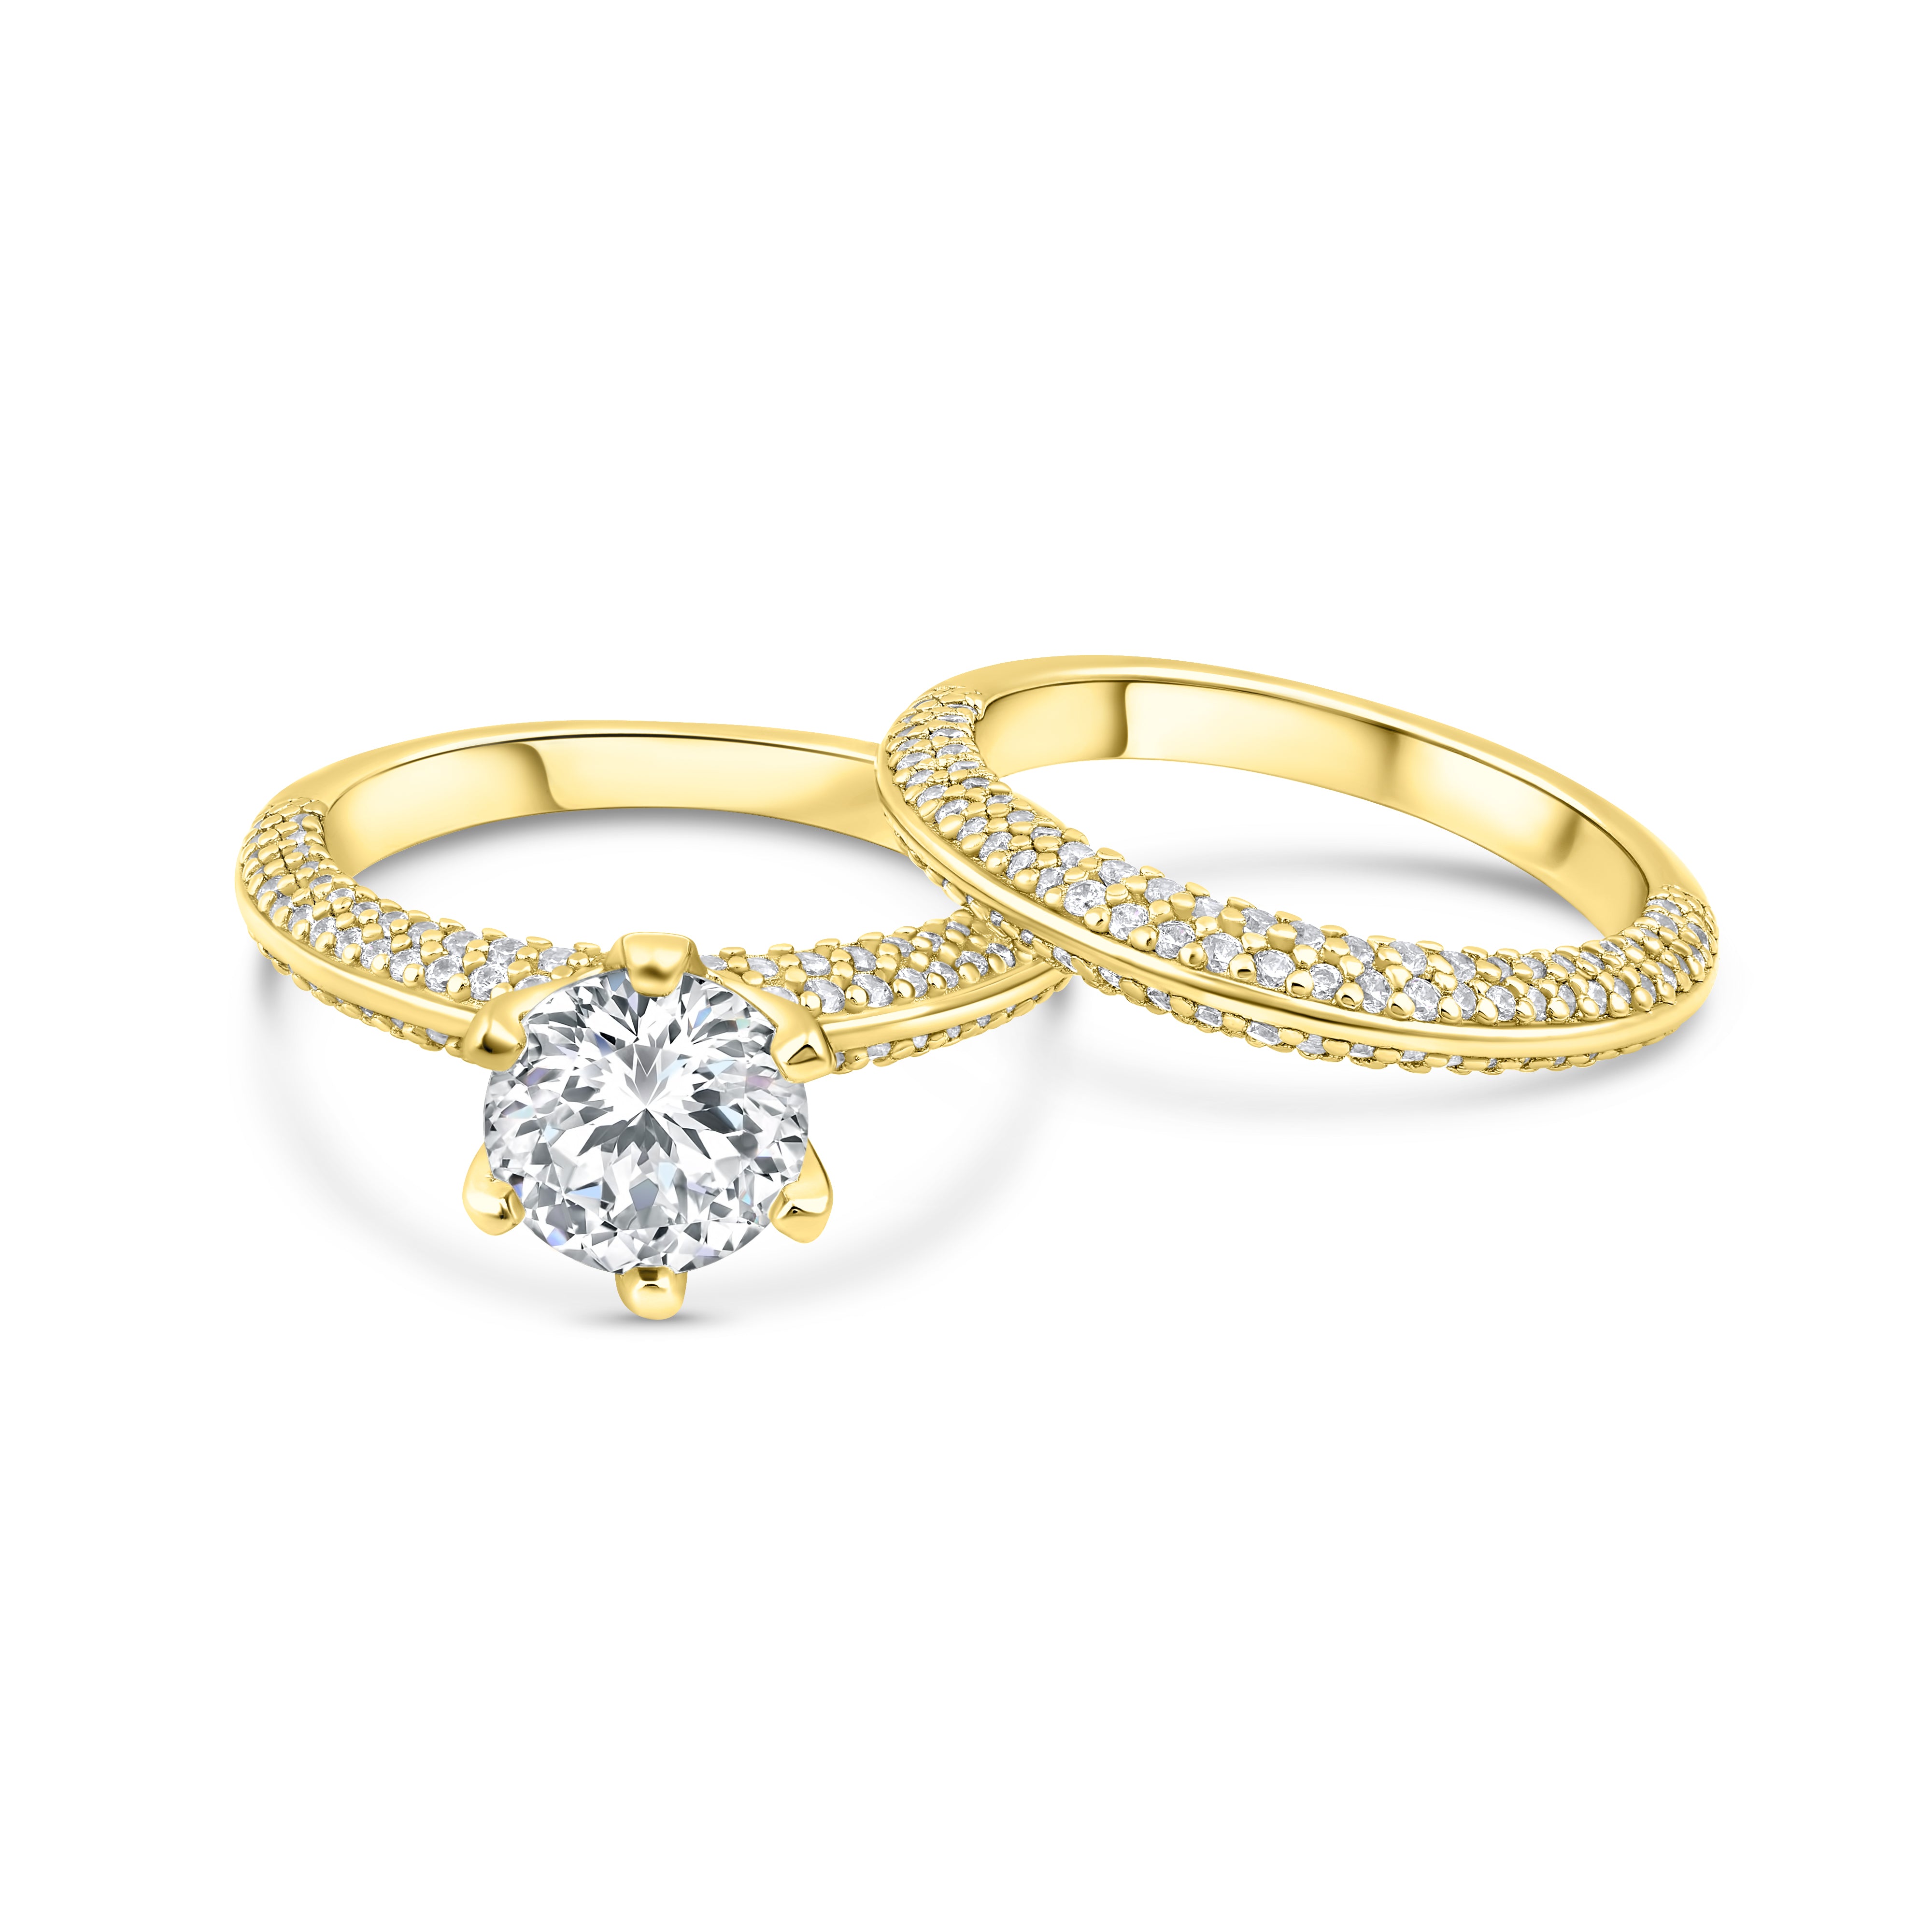 Antique Bridal Wedding Ring Sets | Diamond Mansion